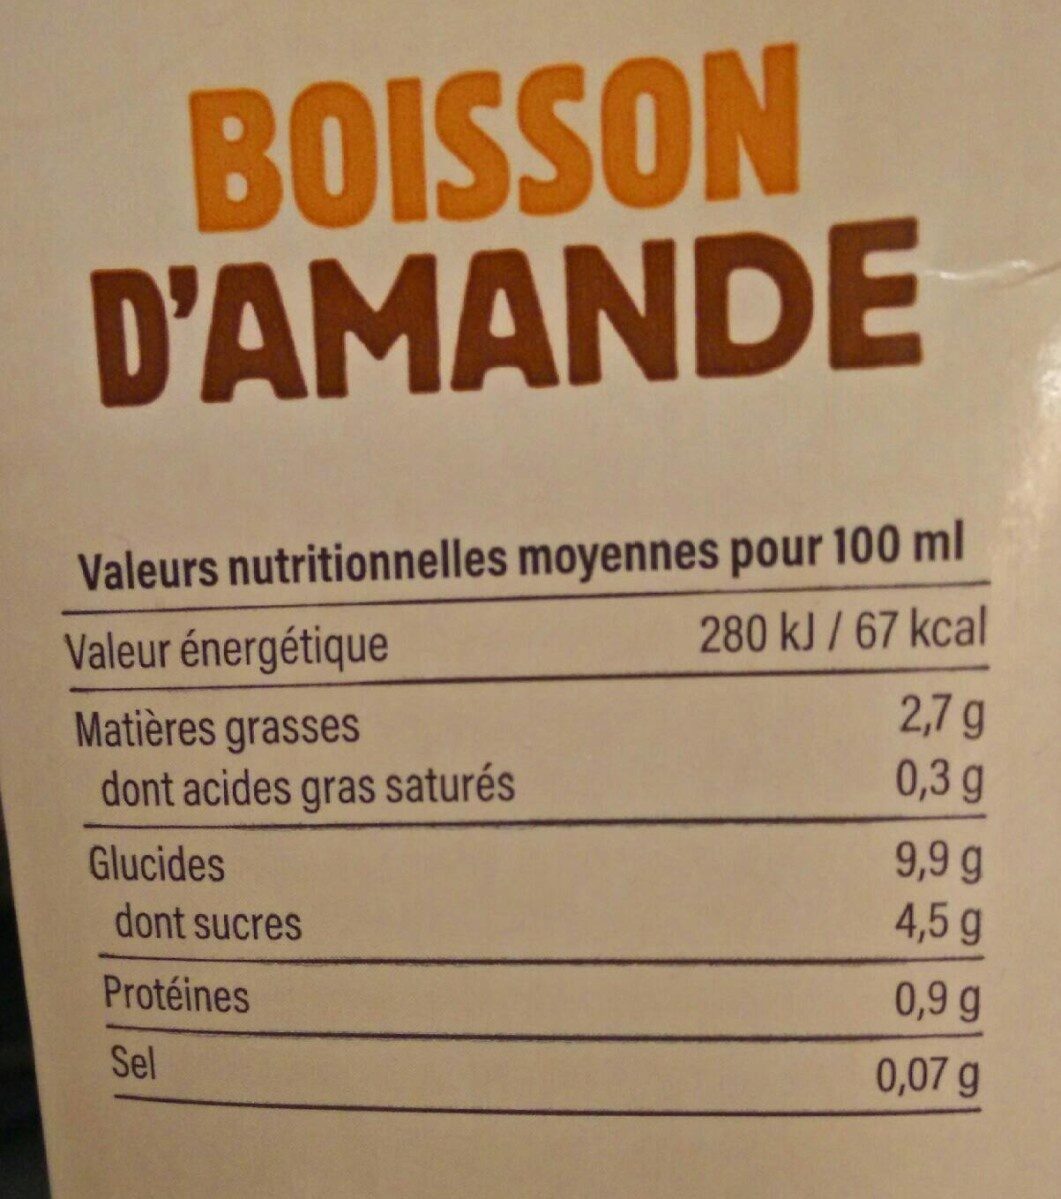 Boisson d'amande - Información nutricional - fr